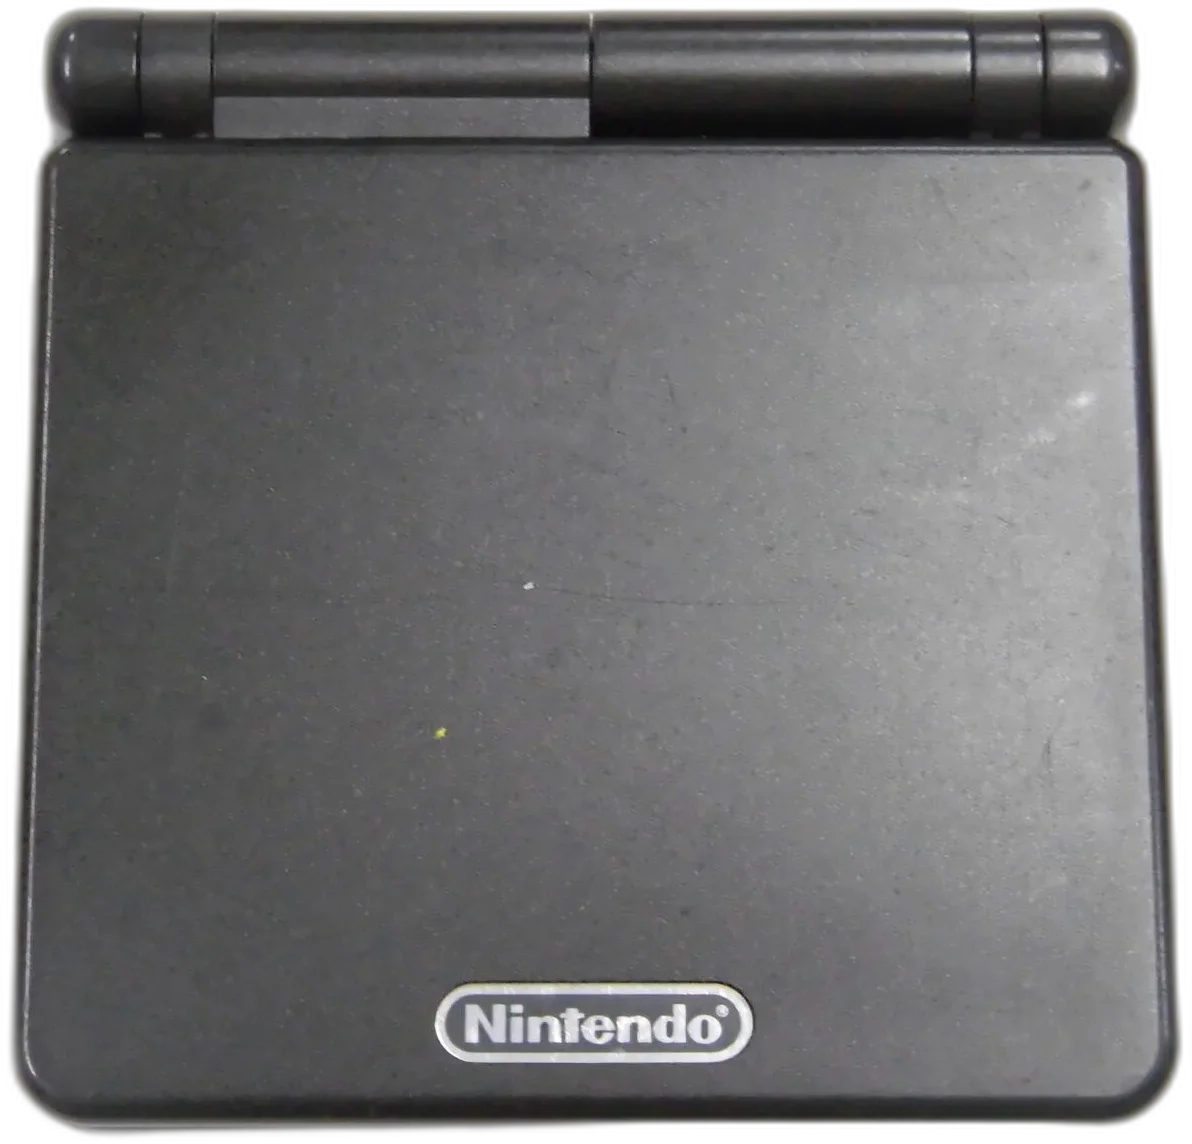  Nintendo Game Boy Advance SP Onyx Console [AUS]